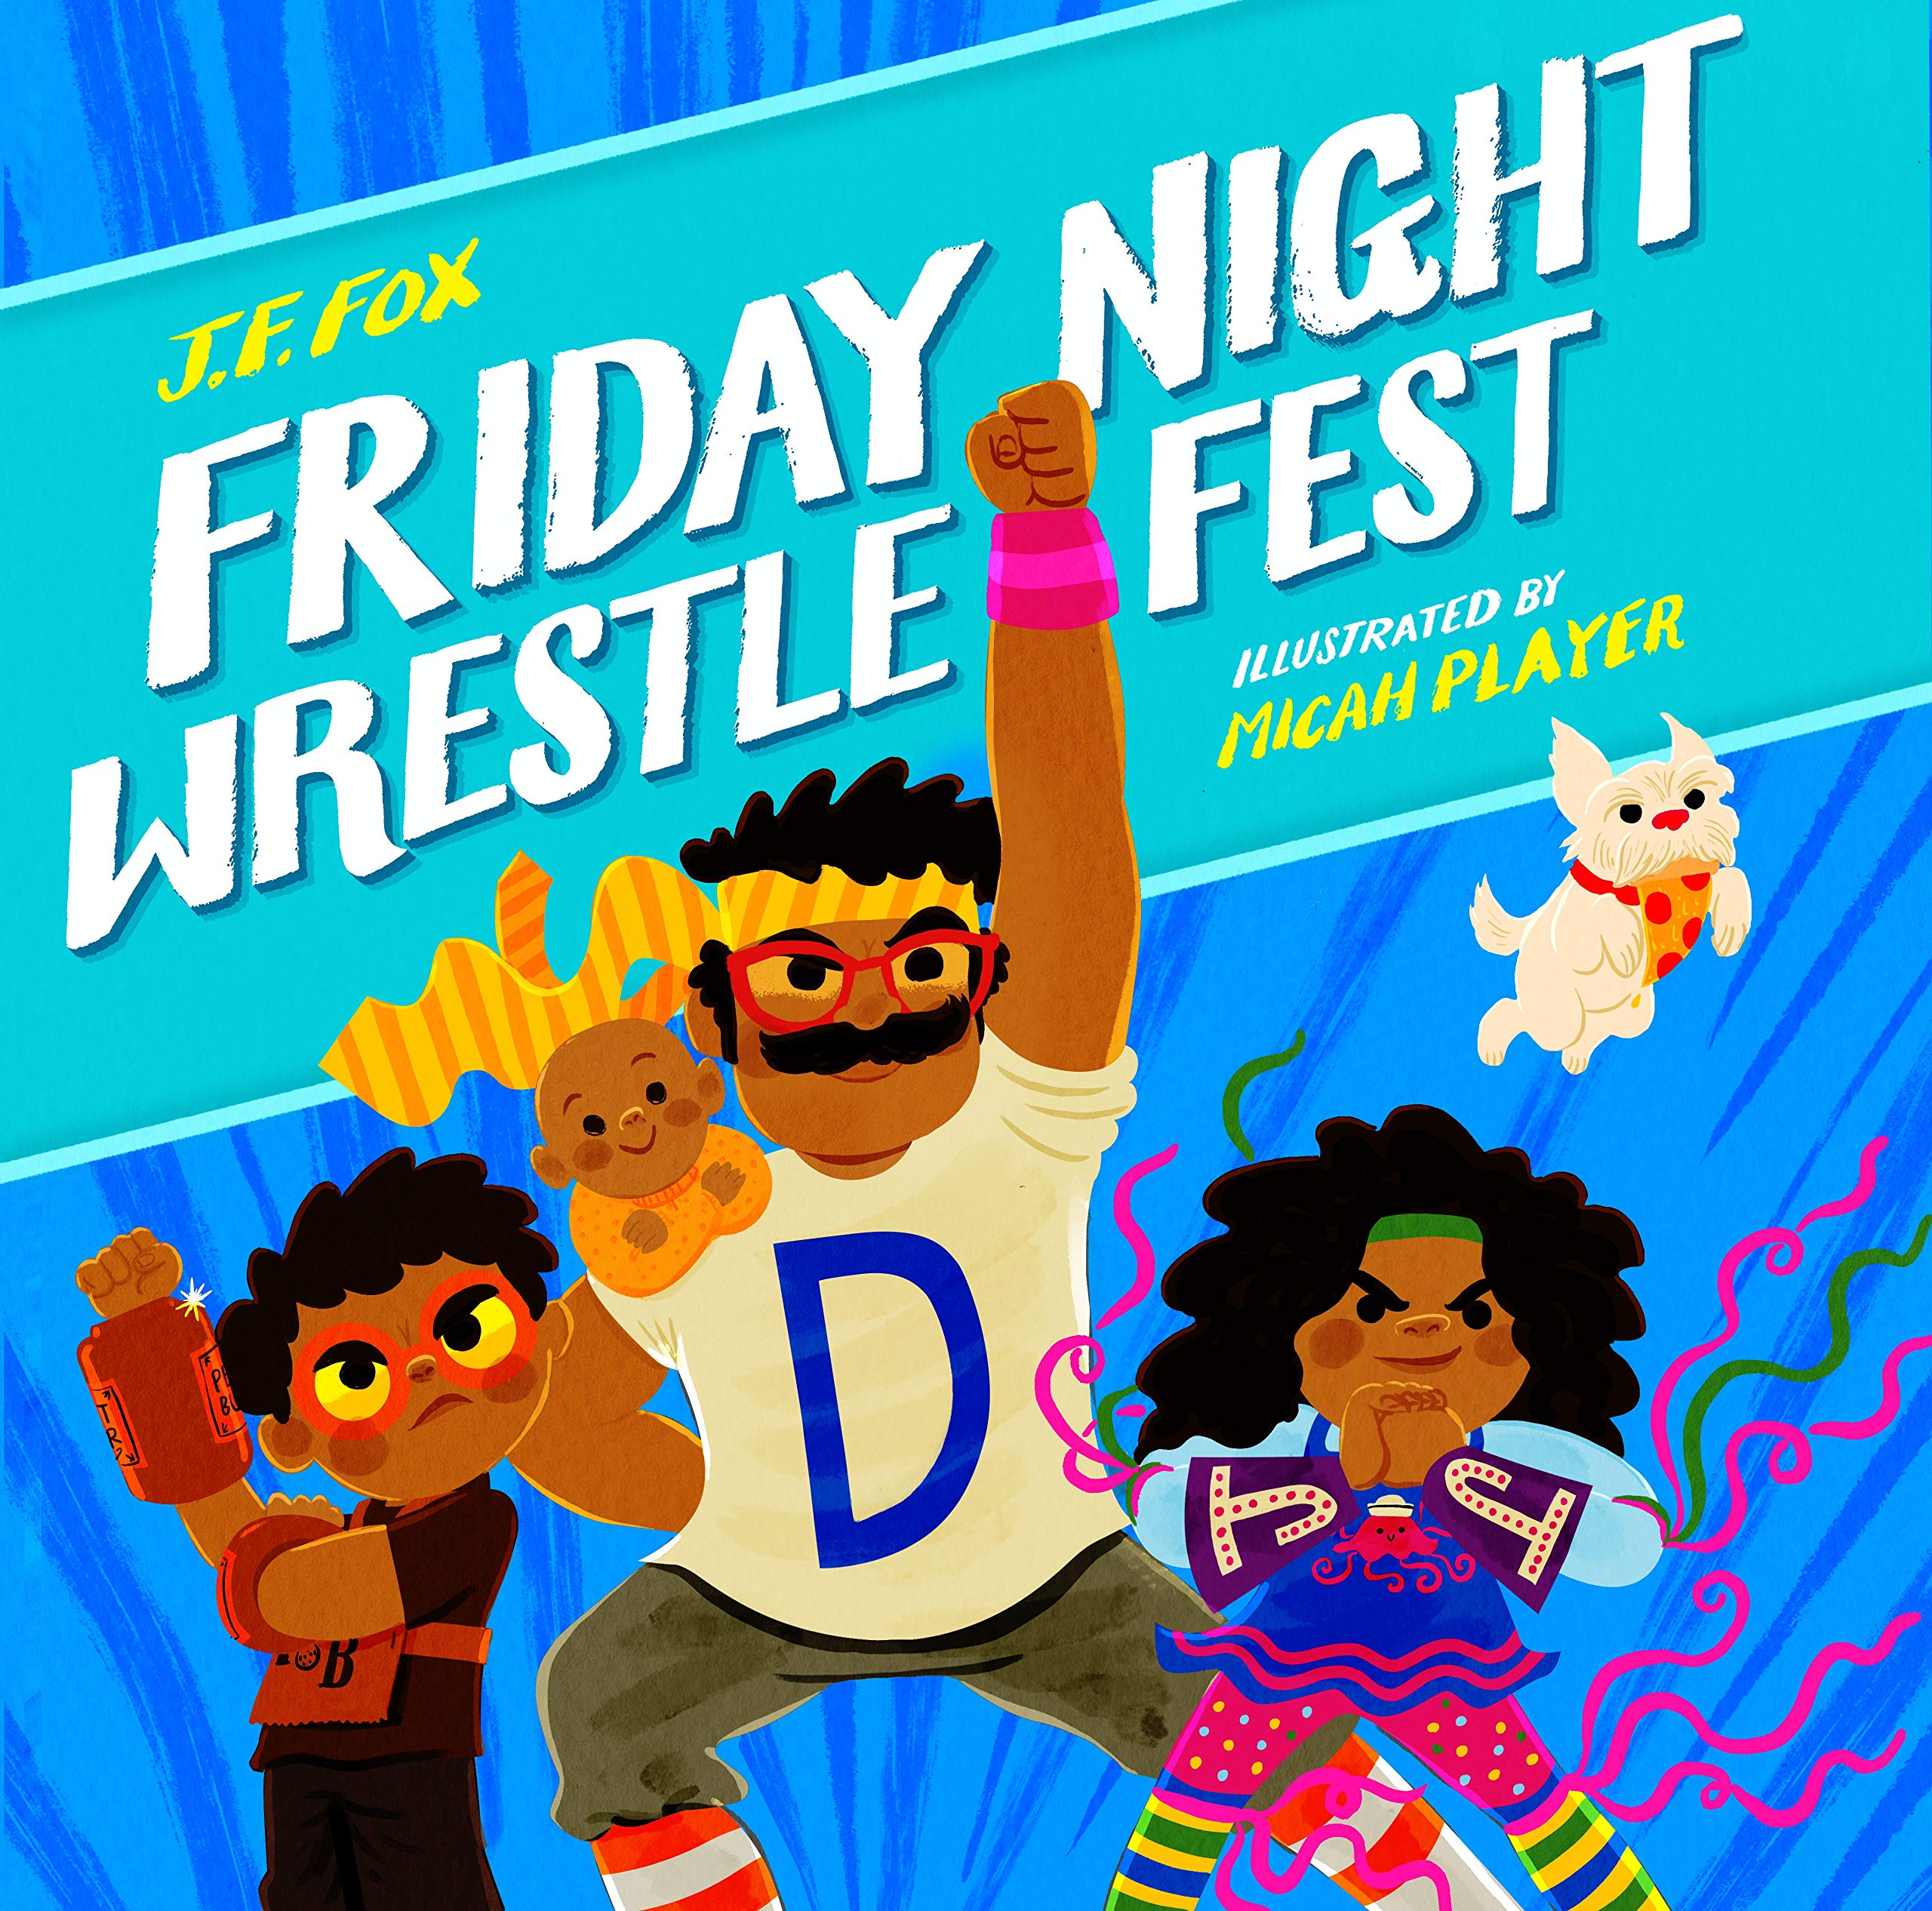 Image for "Friday Night Wrestlefest"